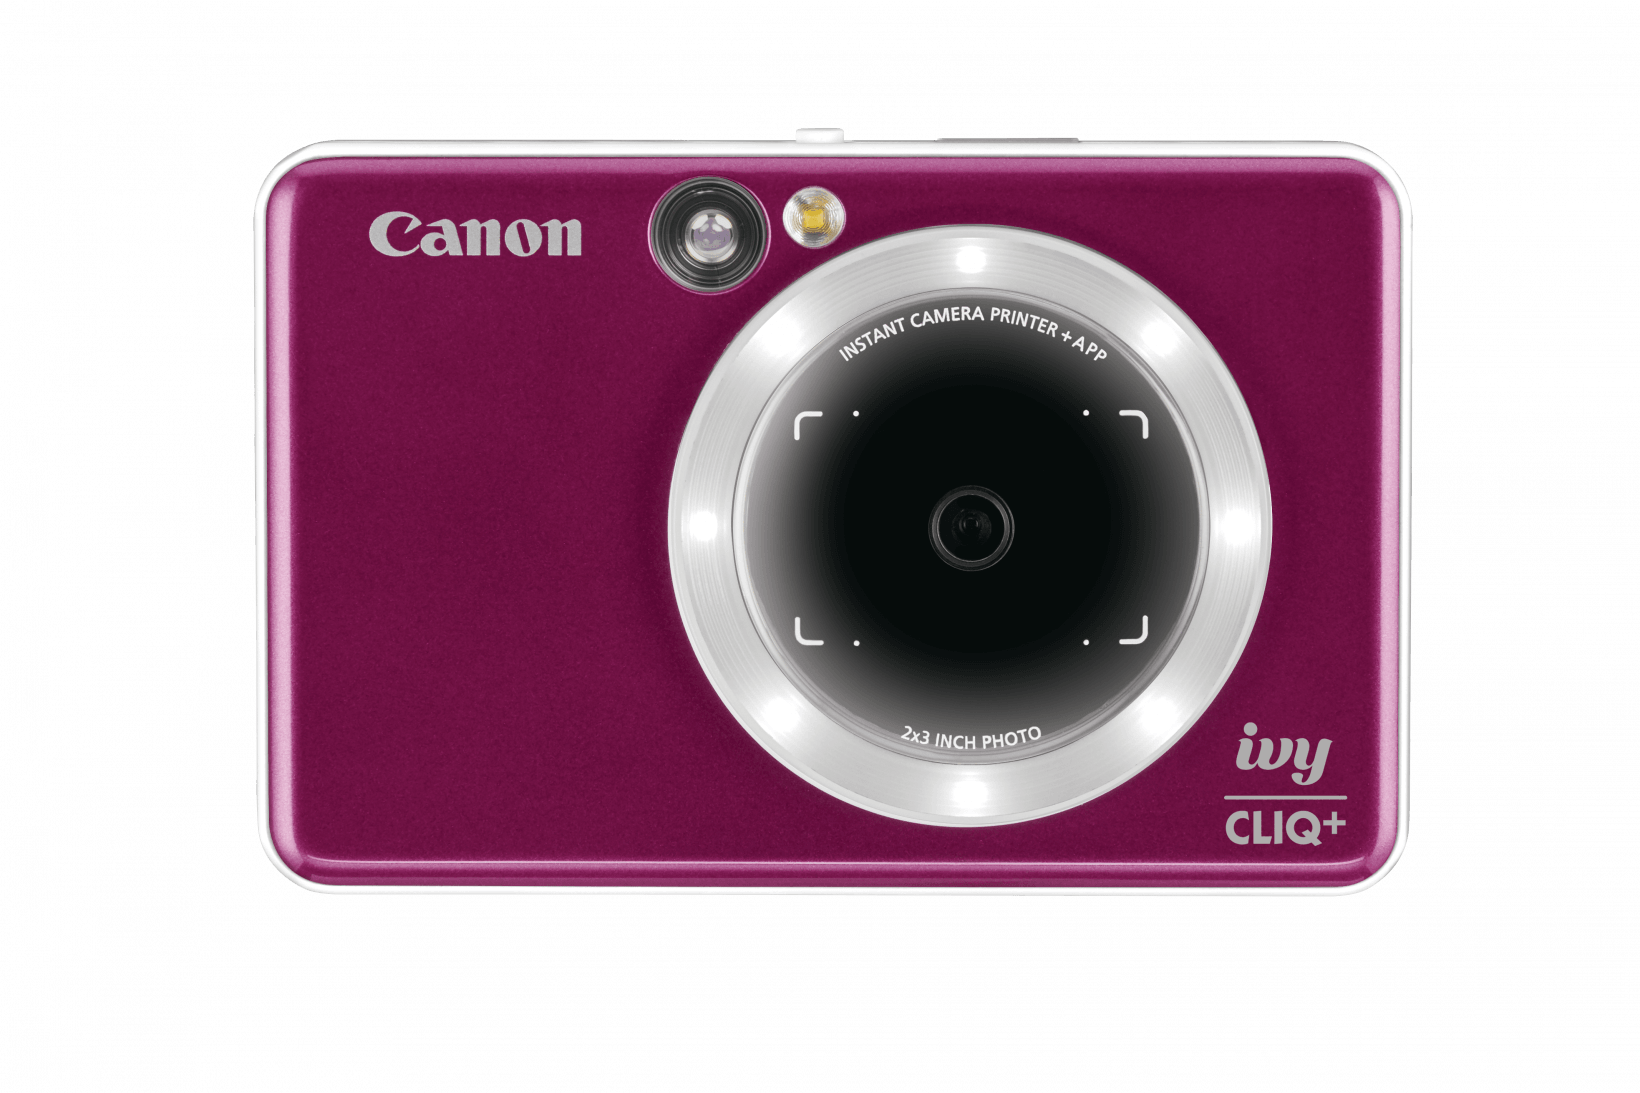 Canon I V Y C L I Q Plus Instant Camera Printer Burgundy PNG